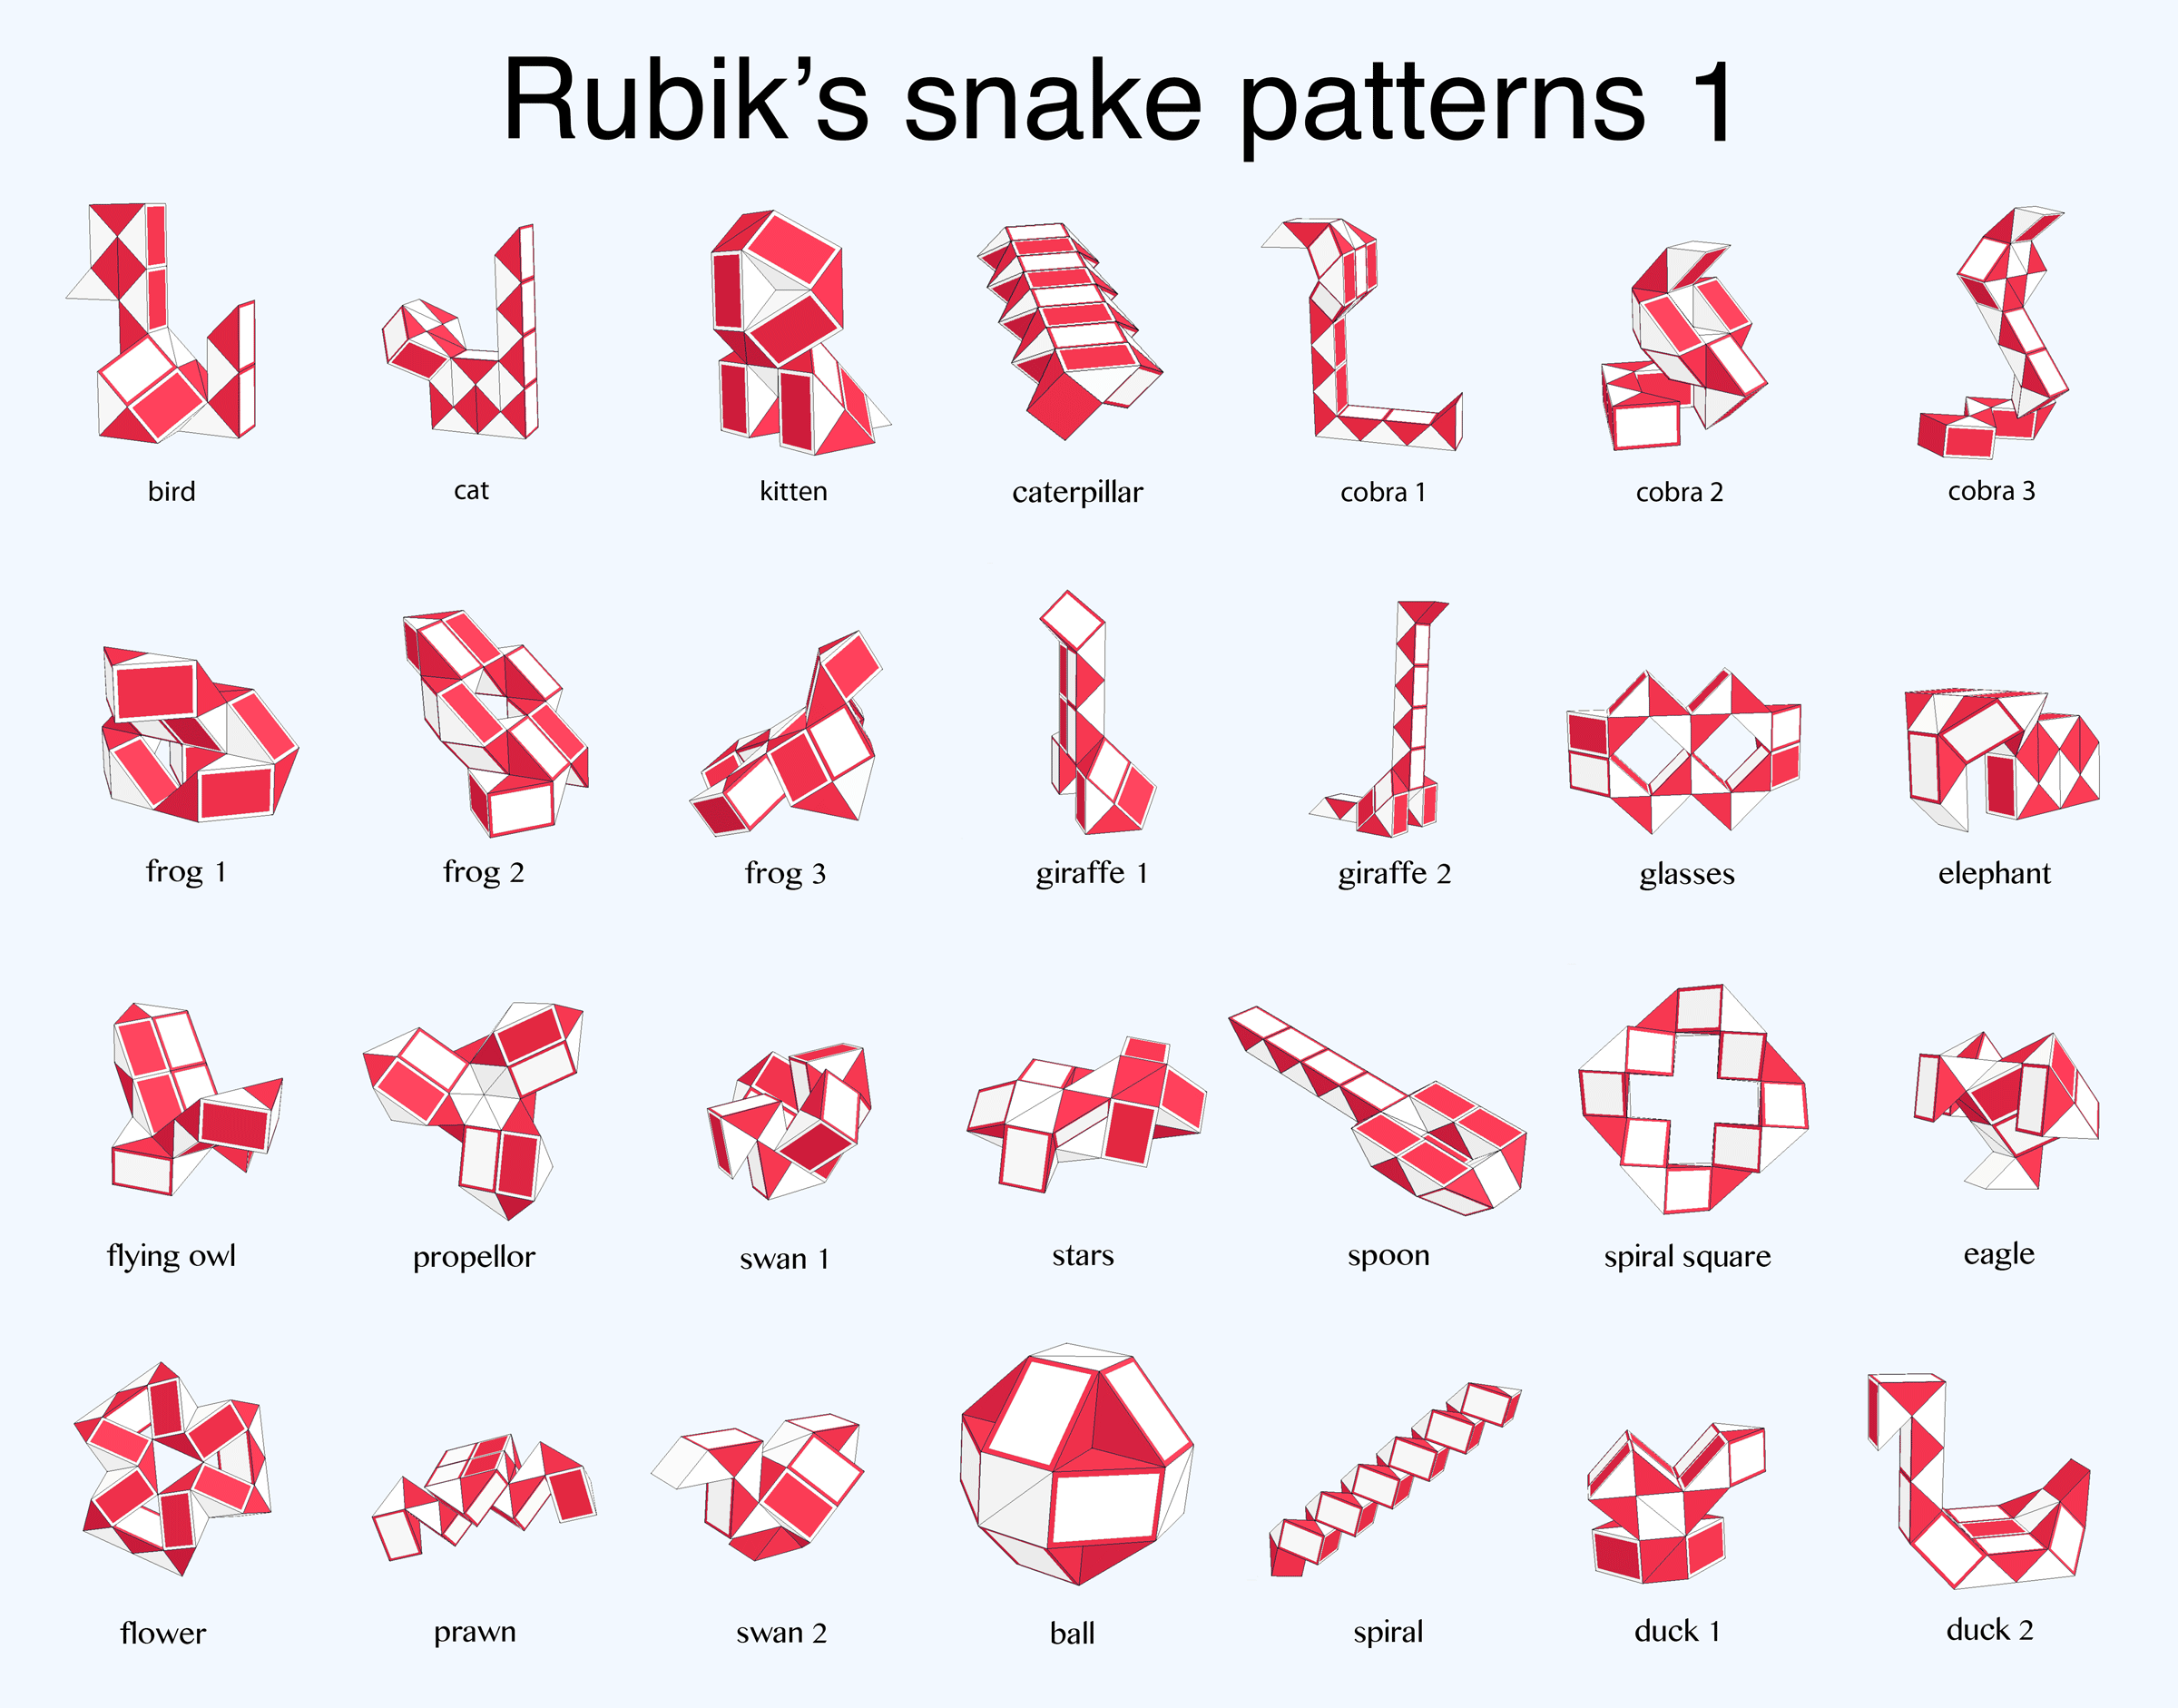 24-wedge-rubiks-snake-rubiks-twist-shapes-patterns-1.gif